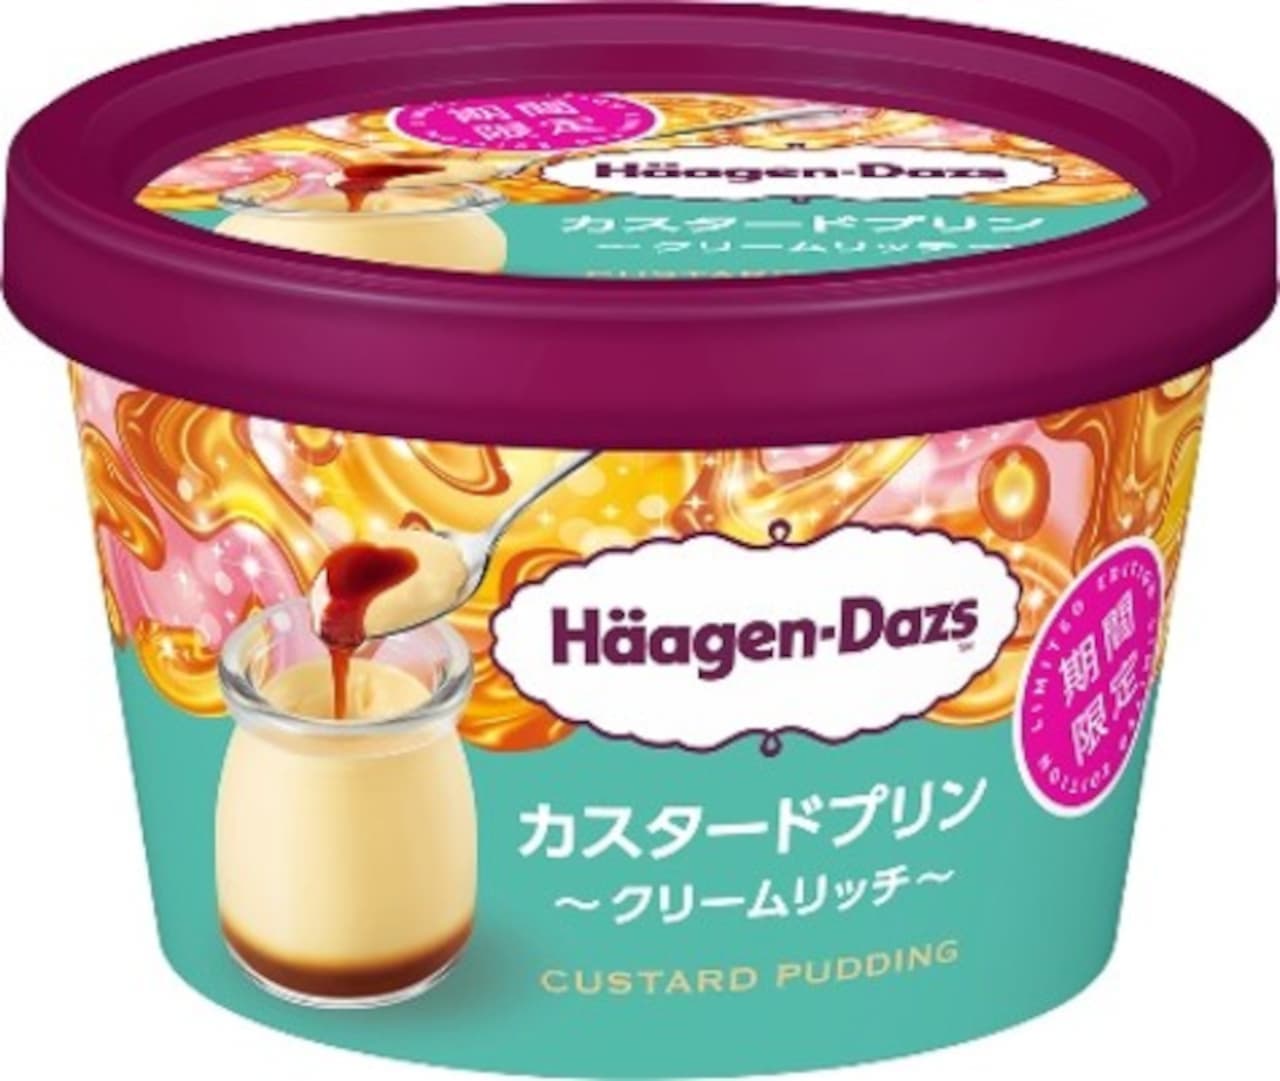 Häagen-Dazs "Custard Pudding - Cream Rich